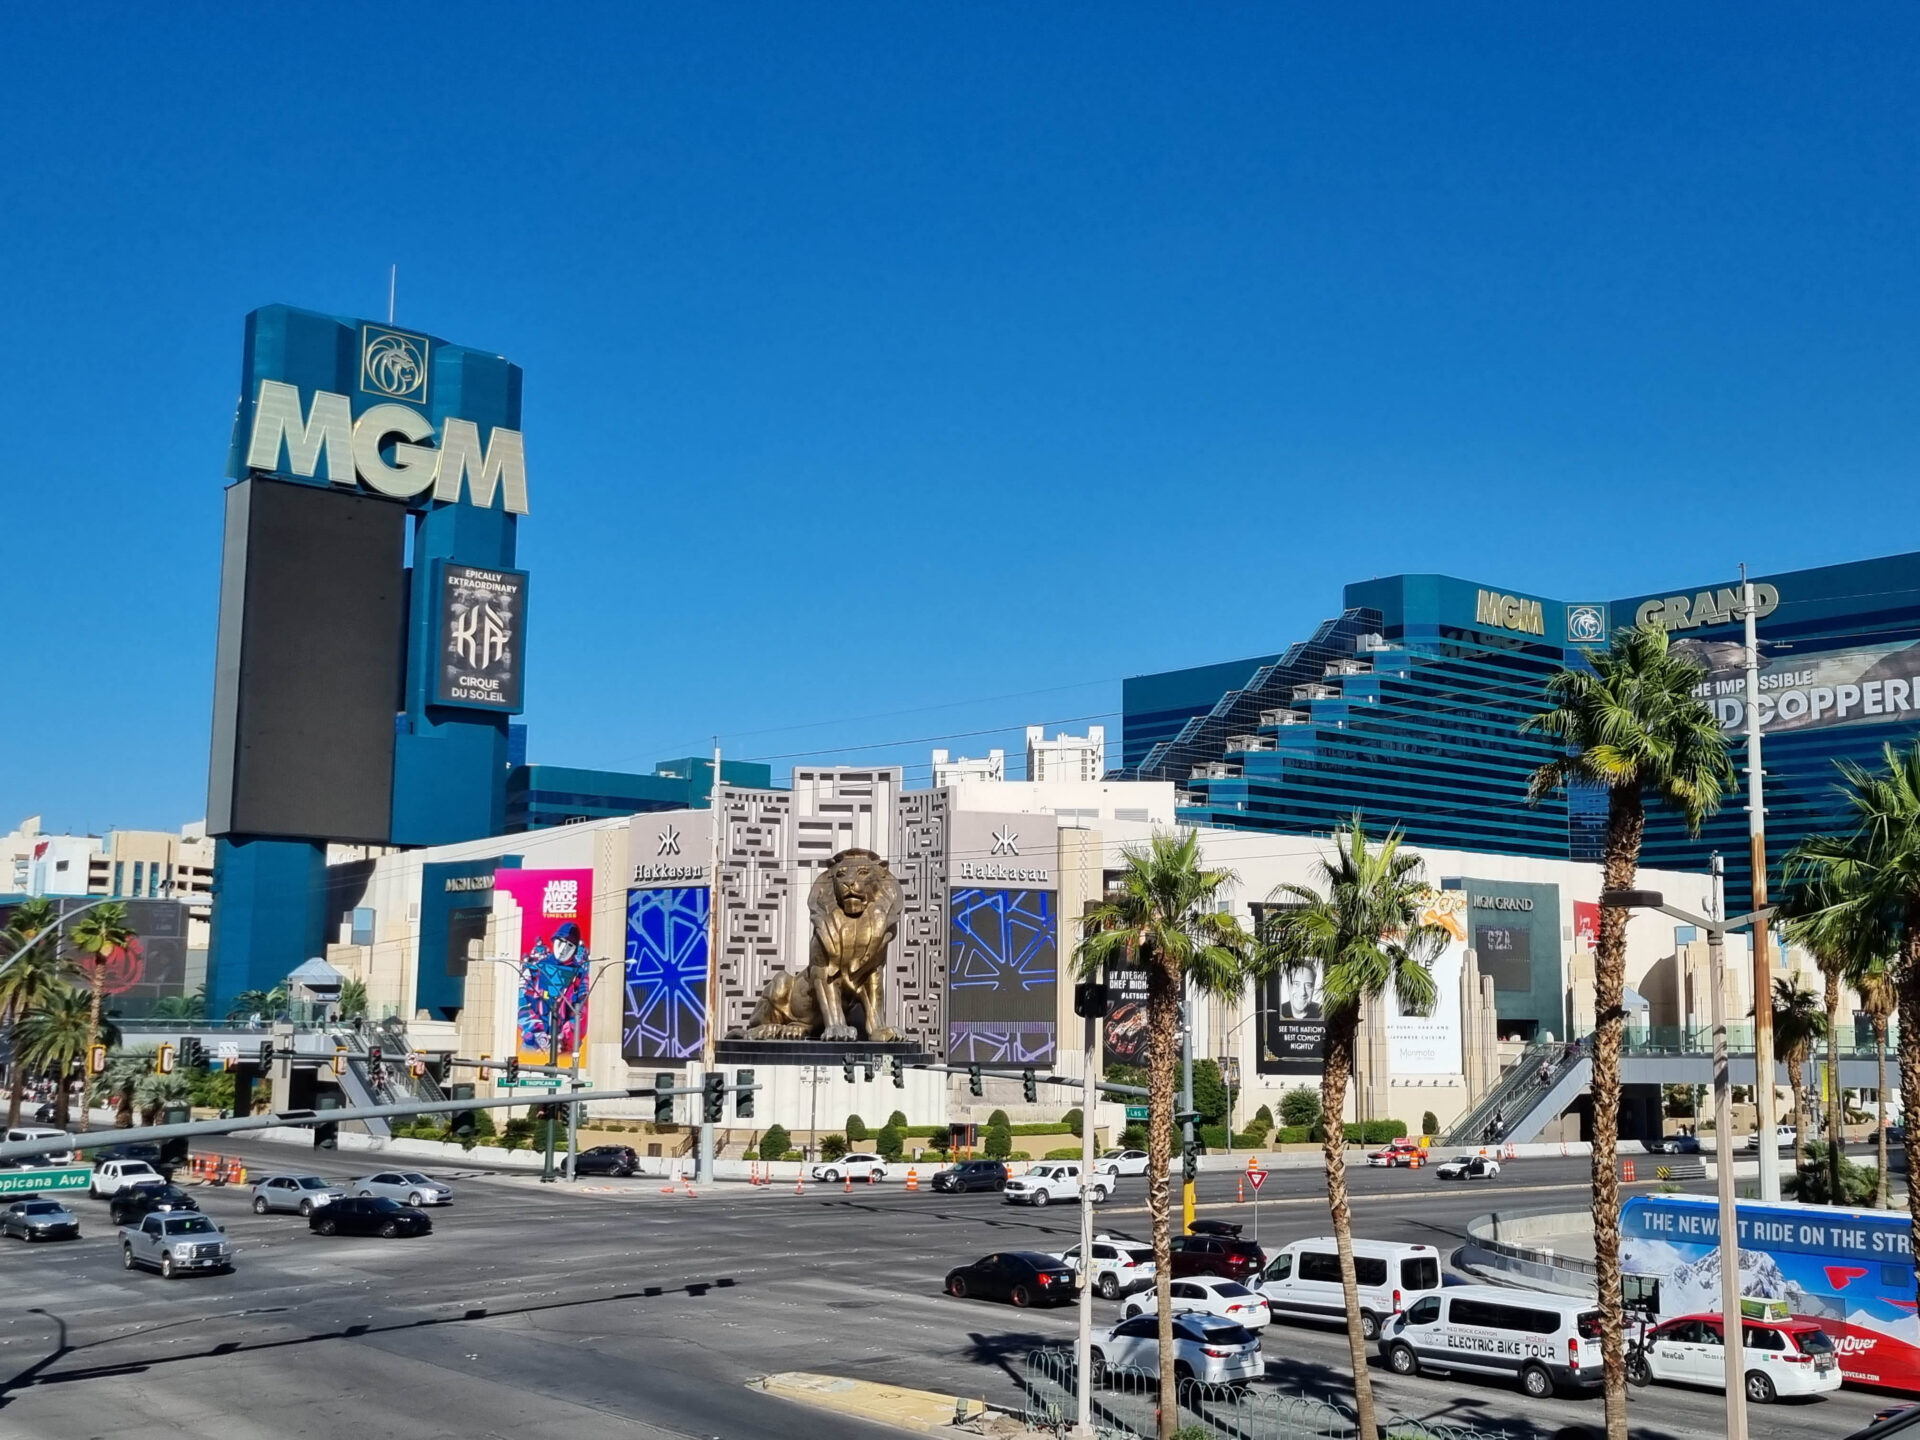 MGM - Las Vegas